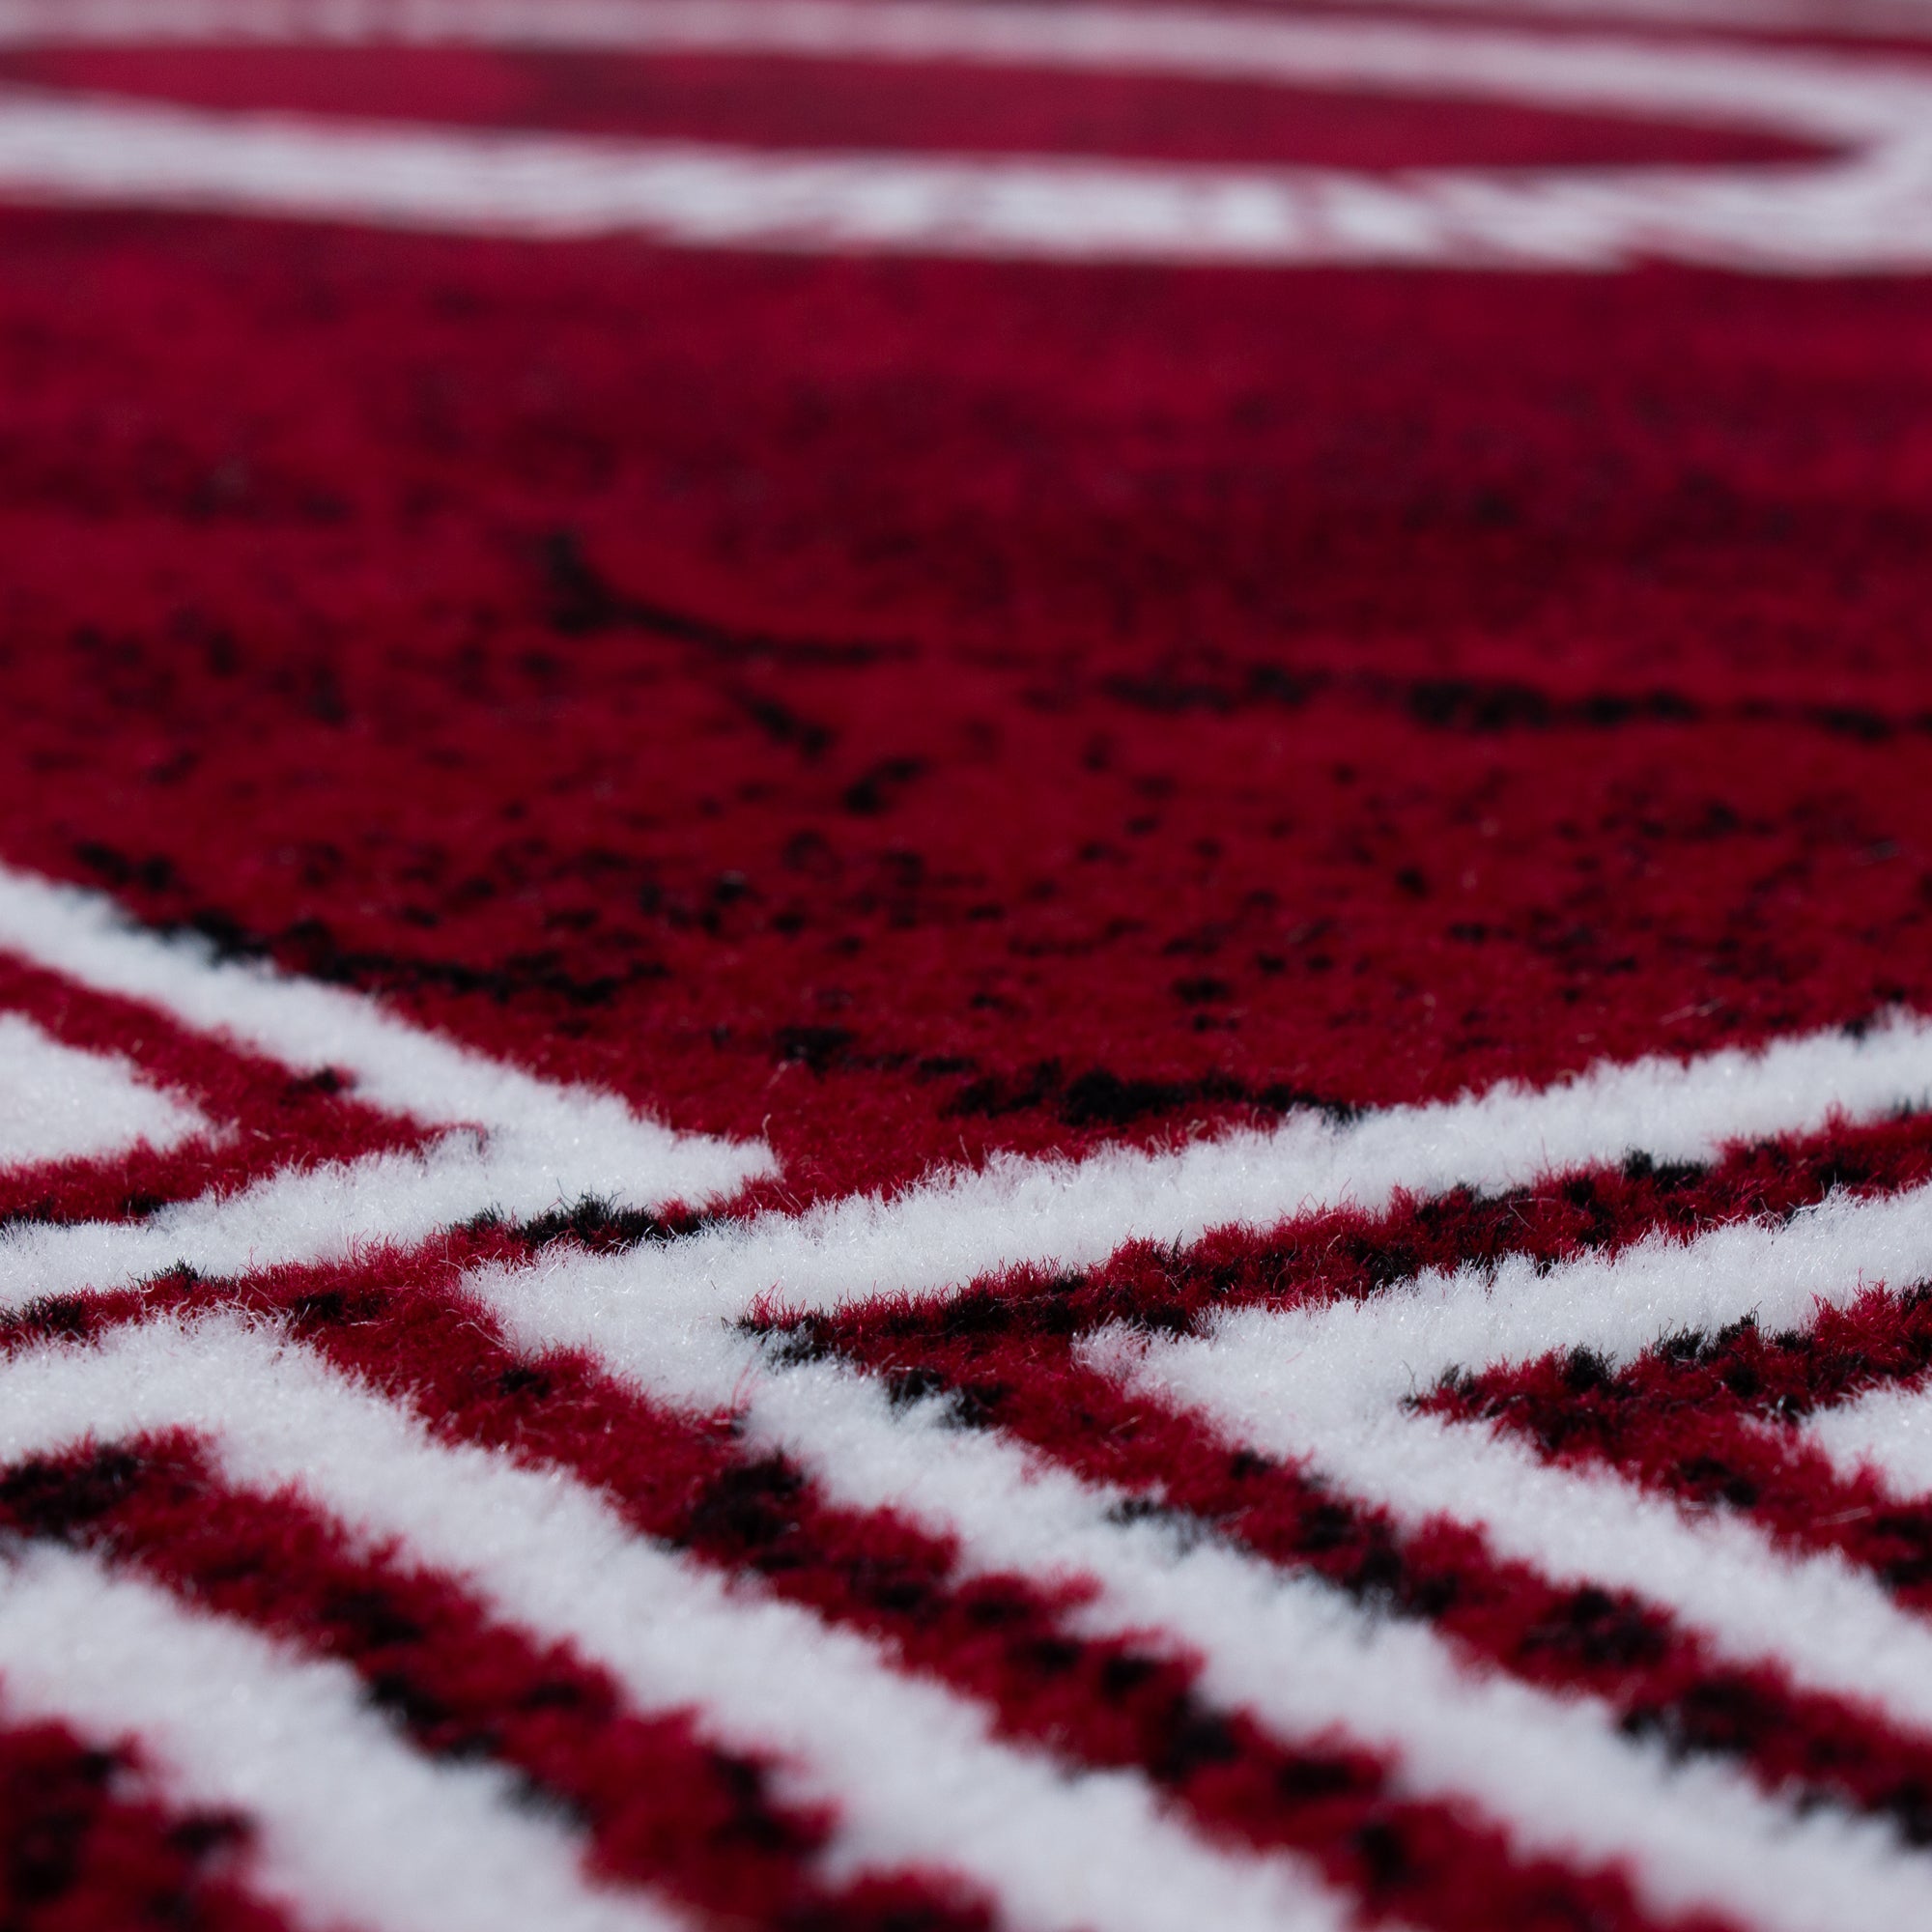 Kurzflor Design Teppich Griechisches Ornament Muster Troja Rot Schwarz Meliert